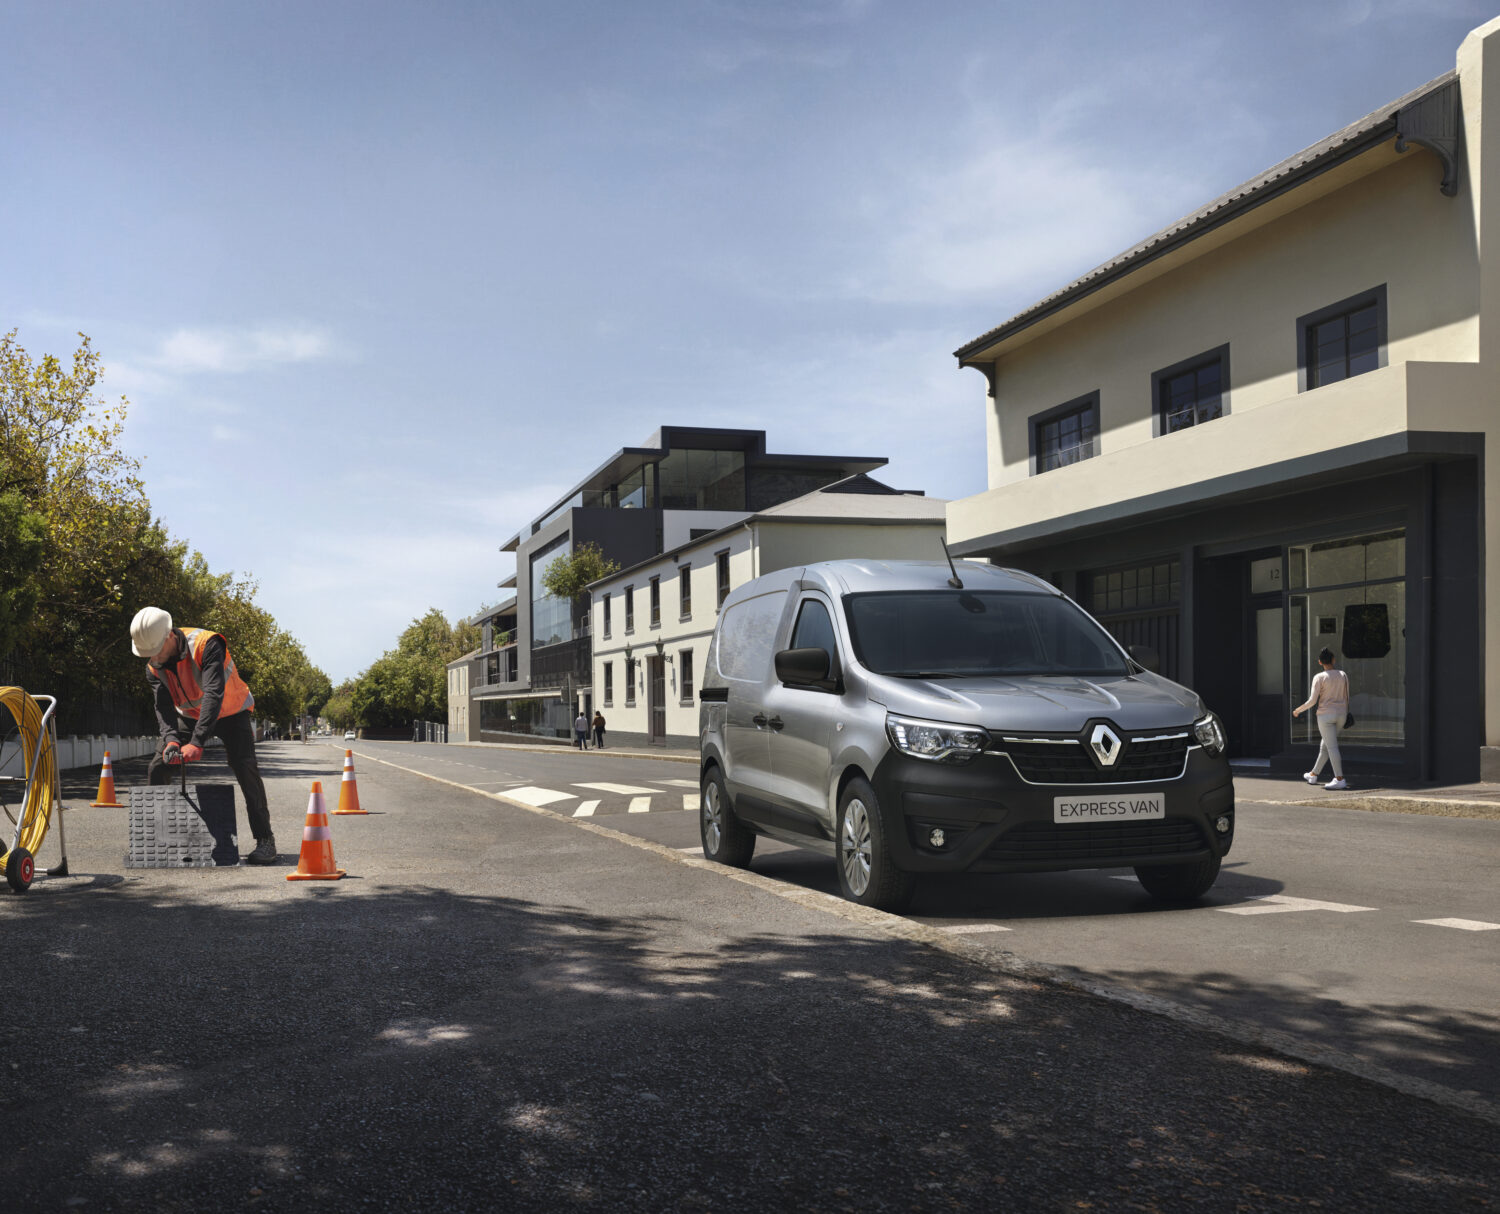 2021 - New Renault Express Van on location.jpg